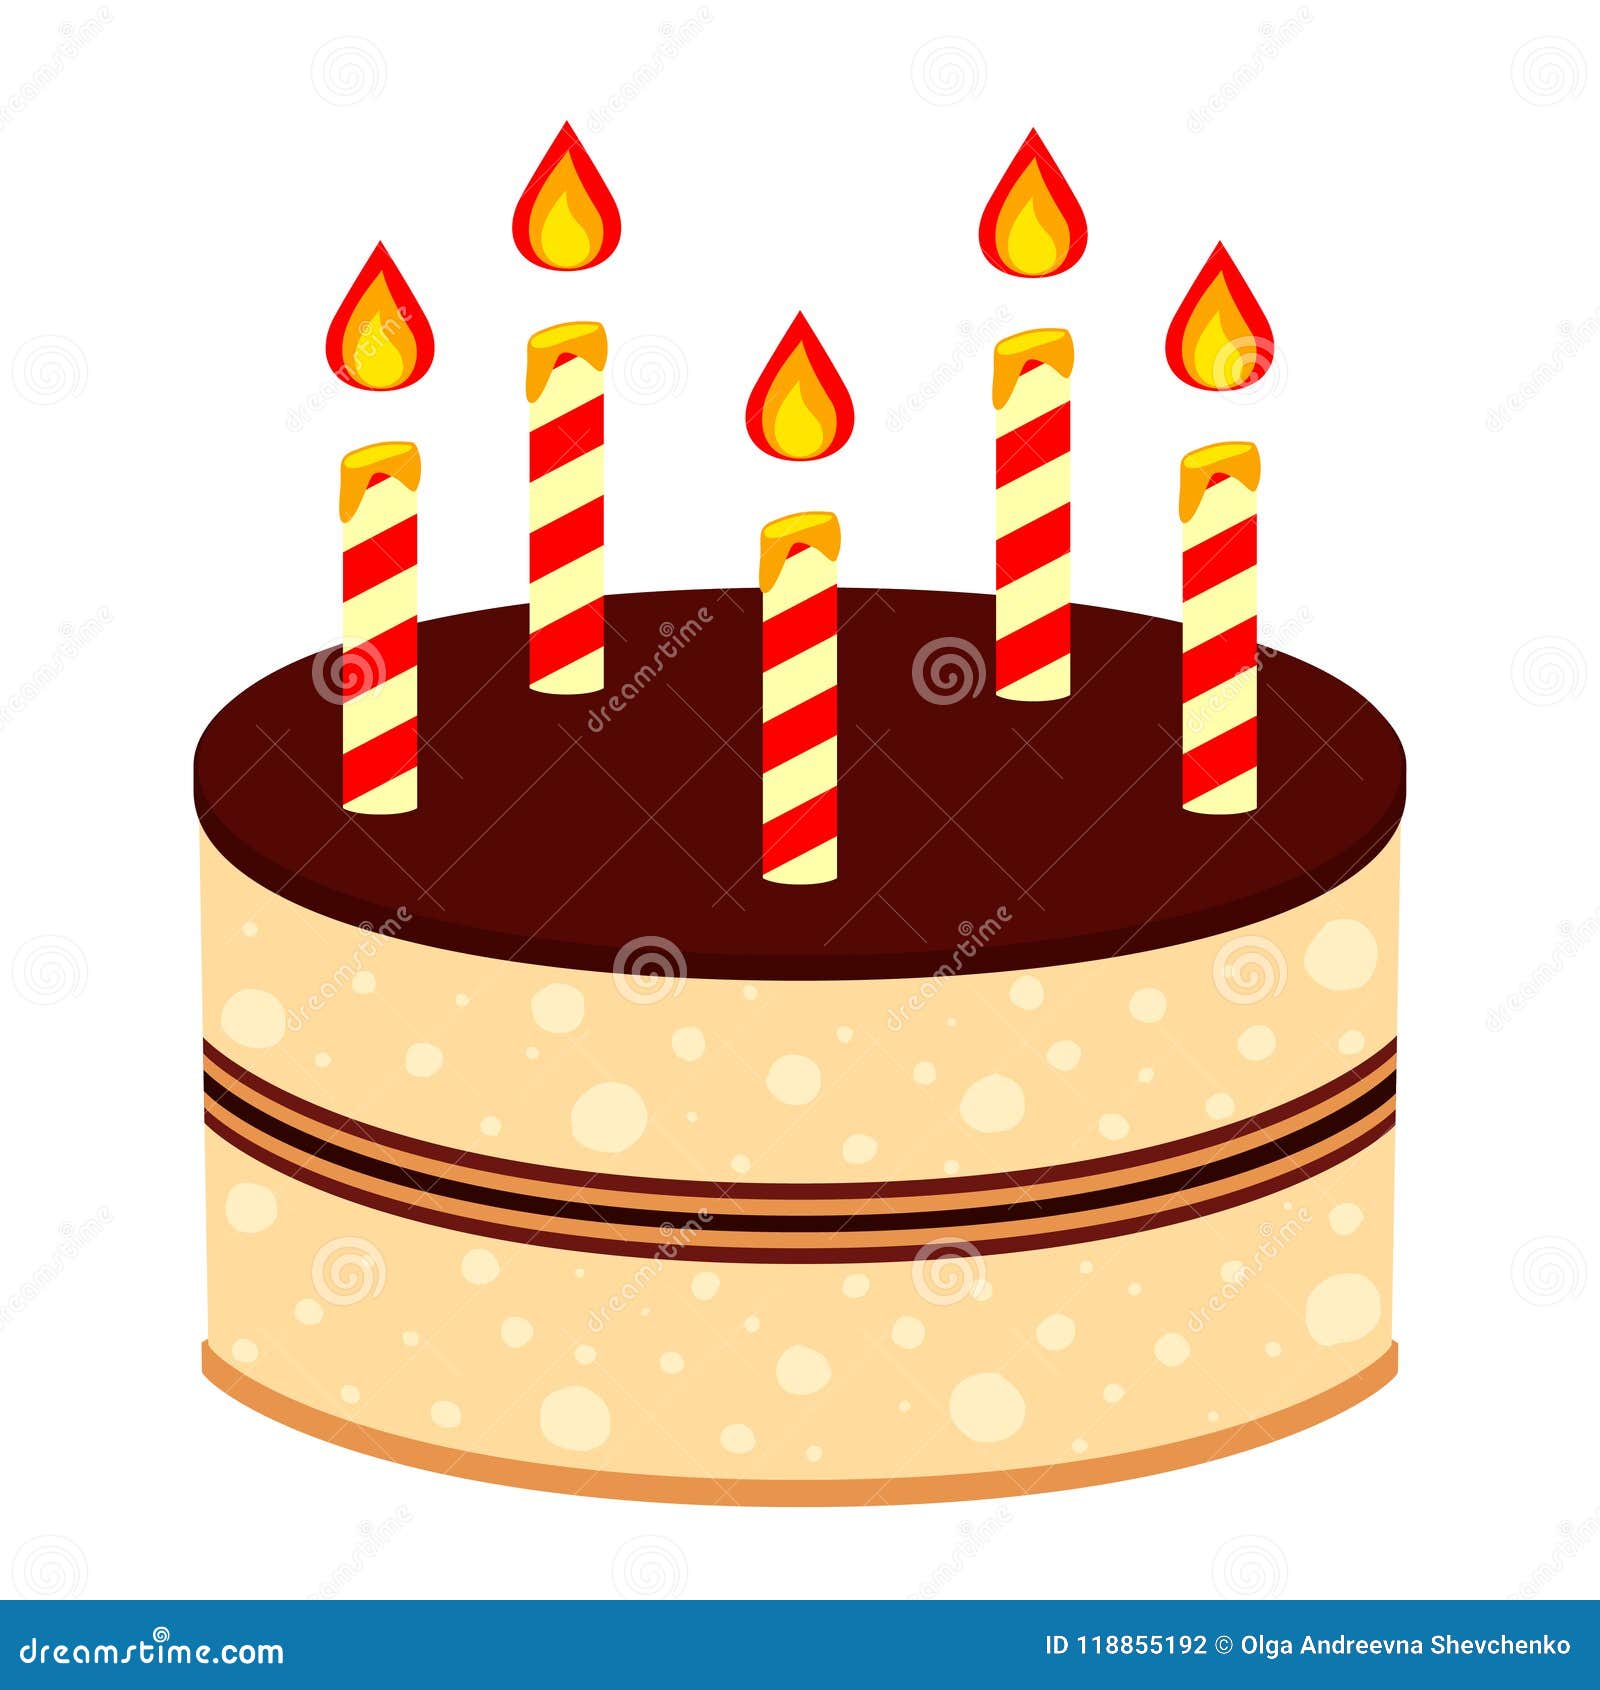 Торт 5 свечей. Торт с пятью свечками. Пять свечей на торте. Торт с 5 свечками. Свеча в торт "5".